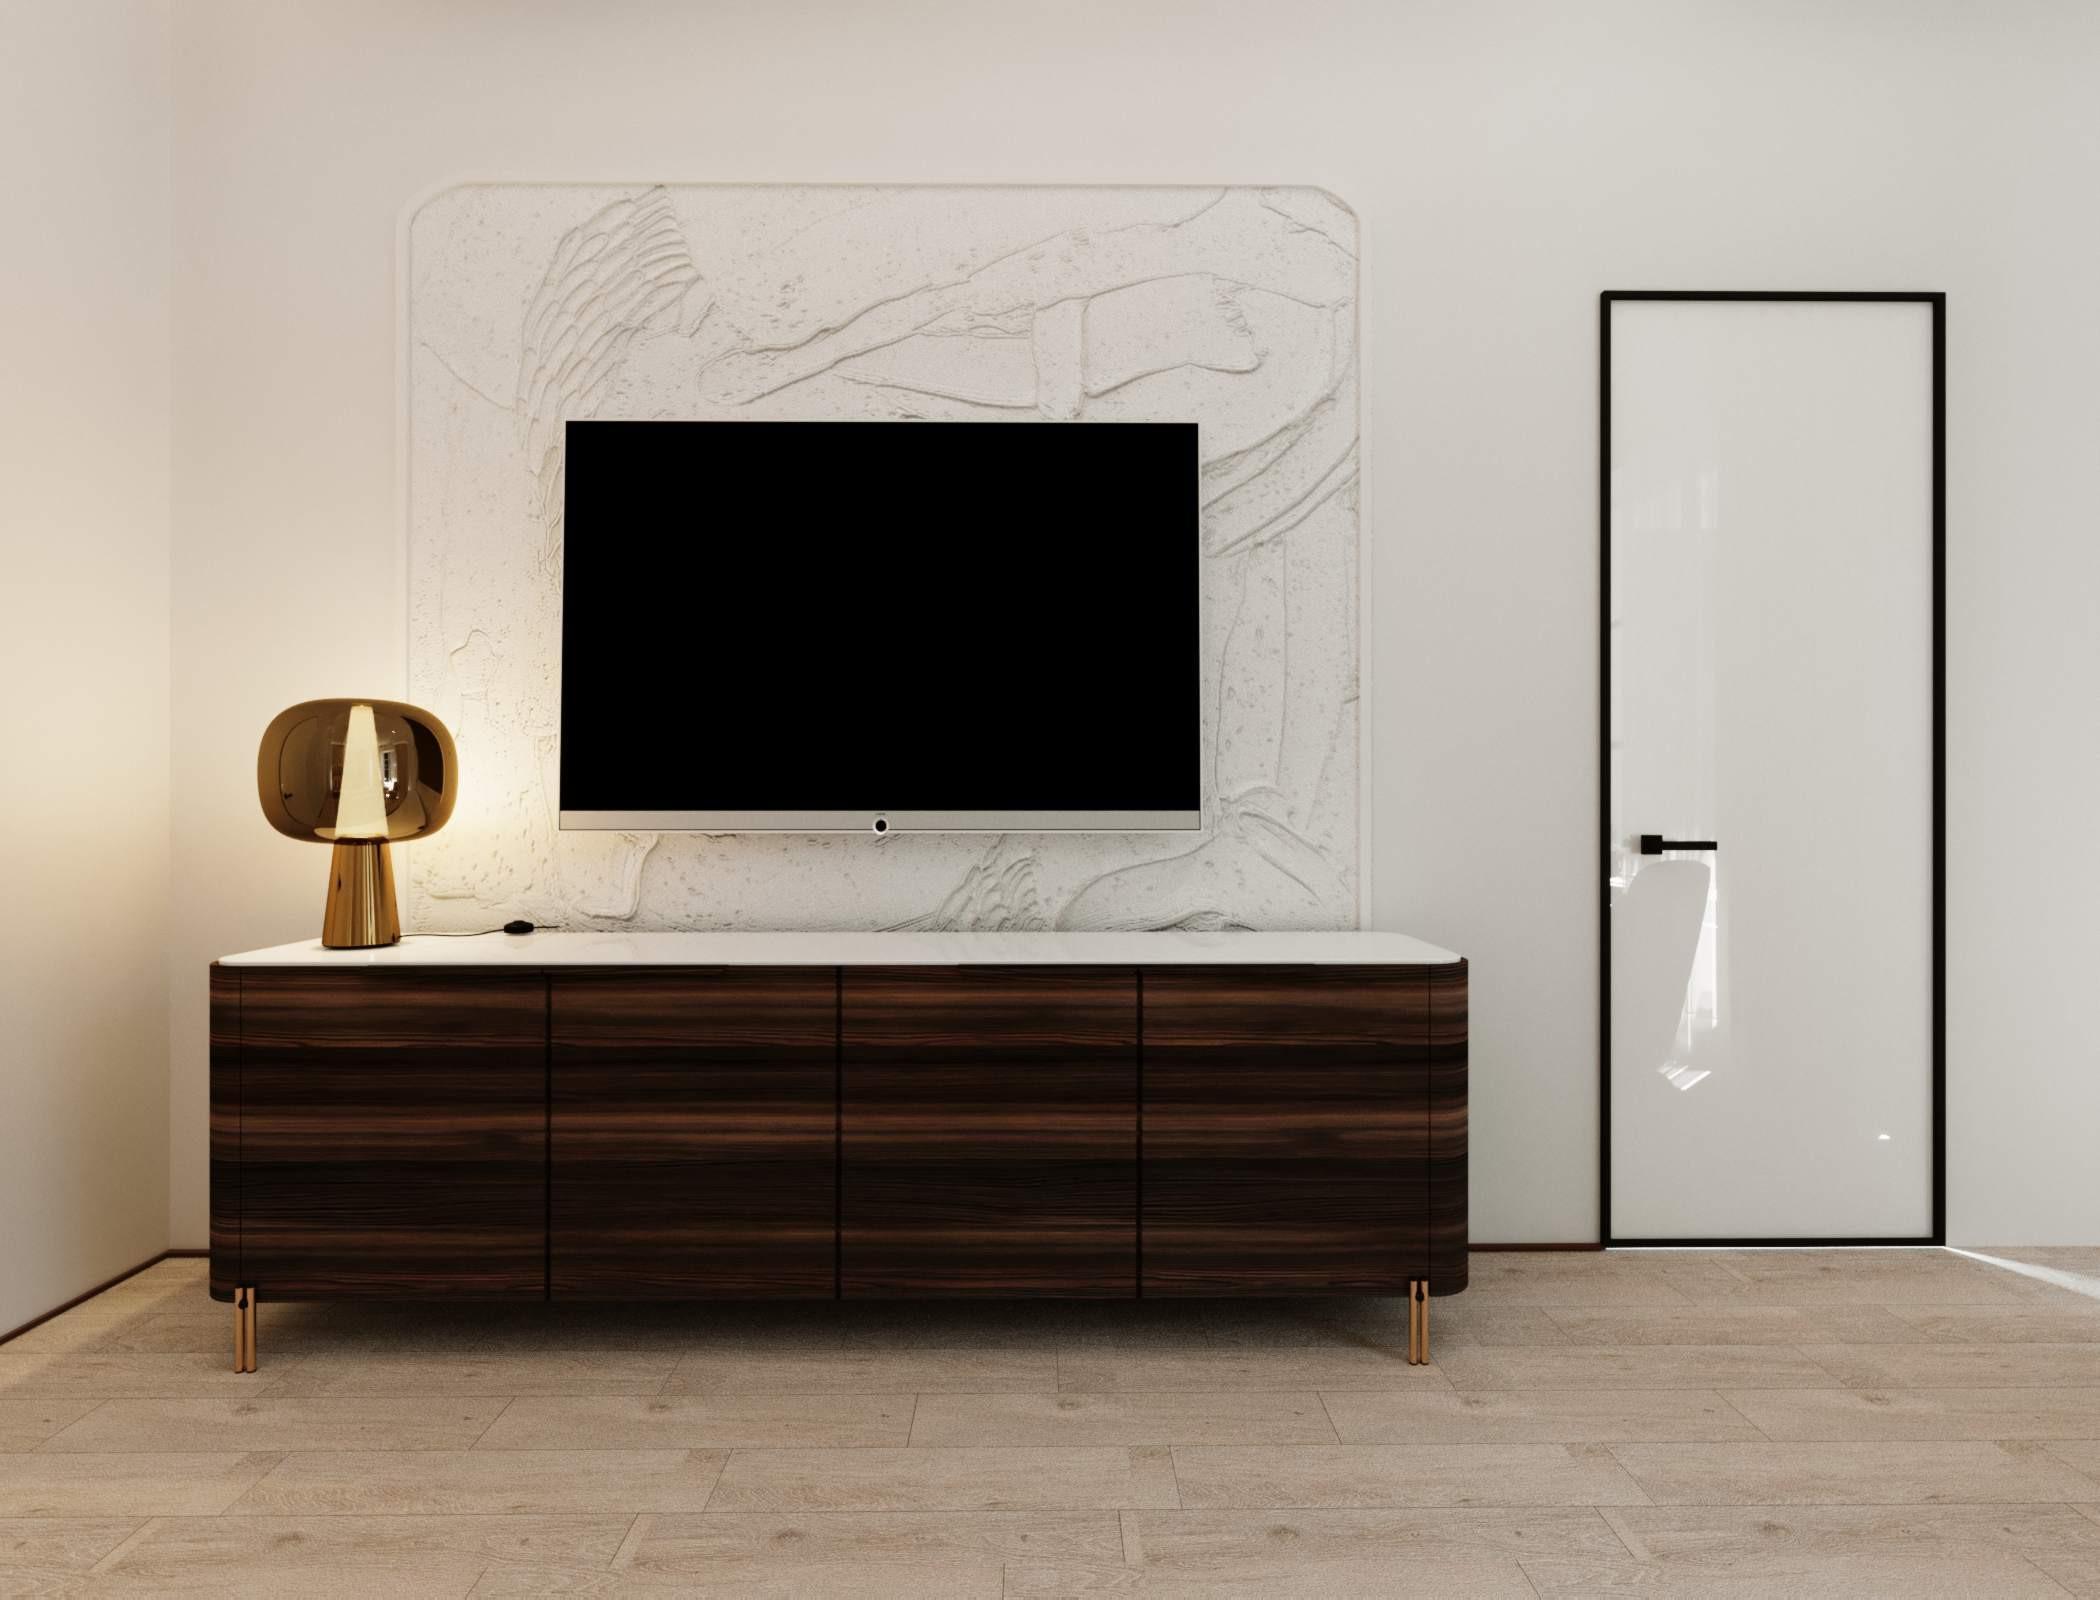 Интерьер с панно за телевизором и керамогранитом на стену с телевизором в современном стиле